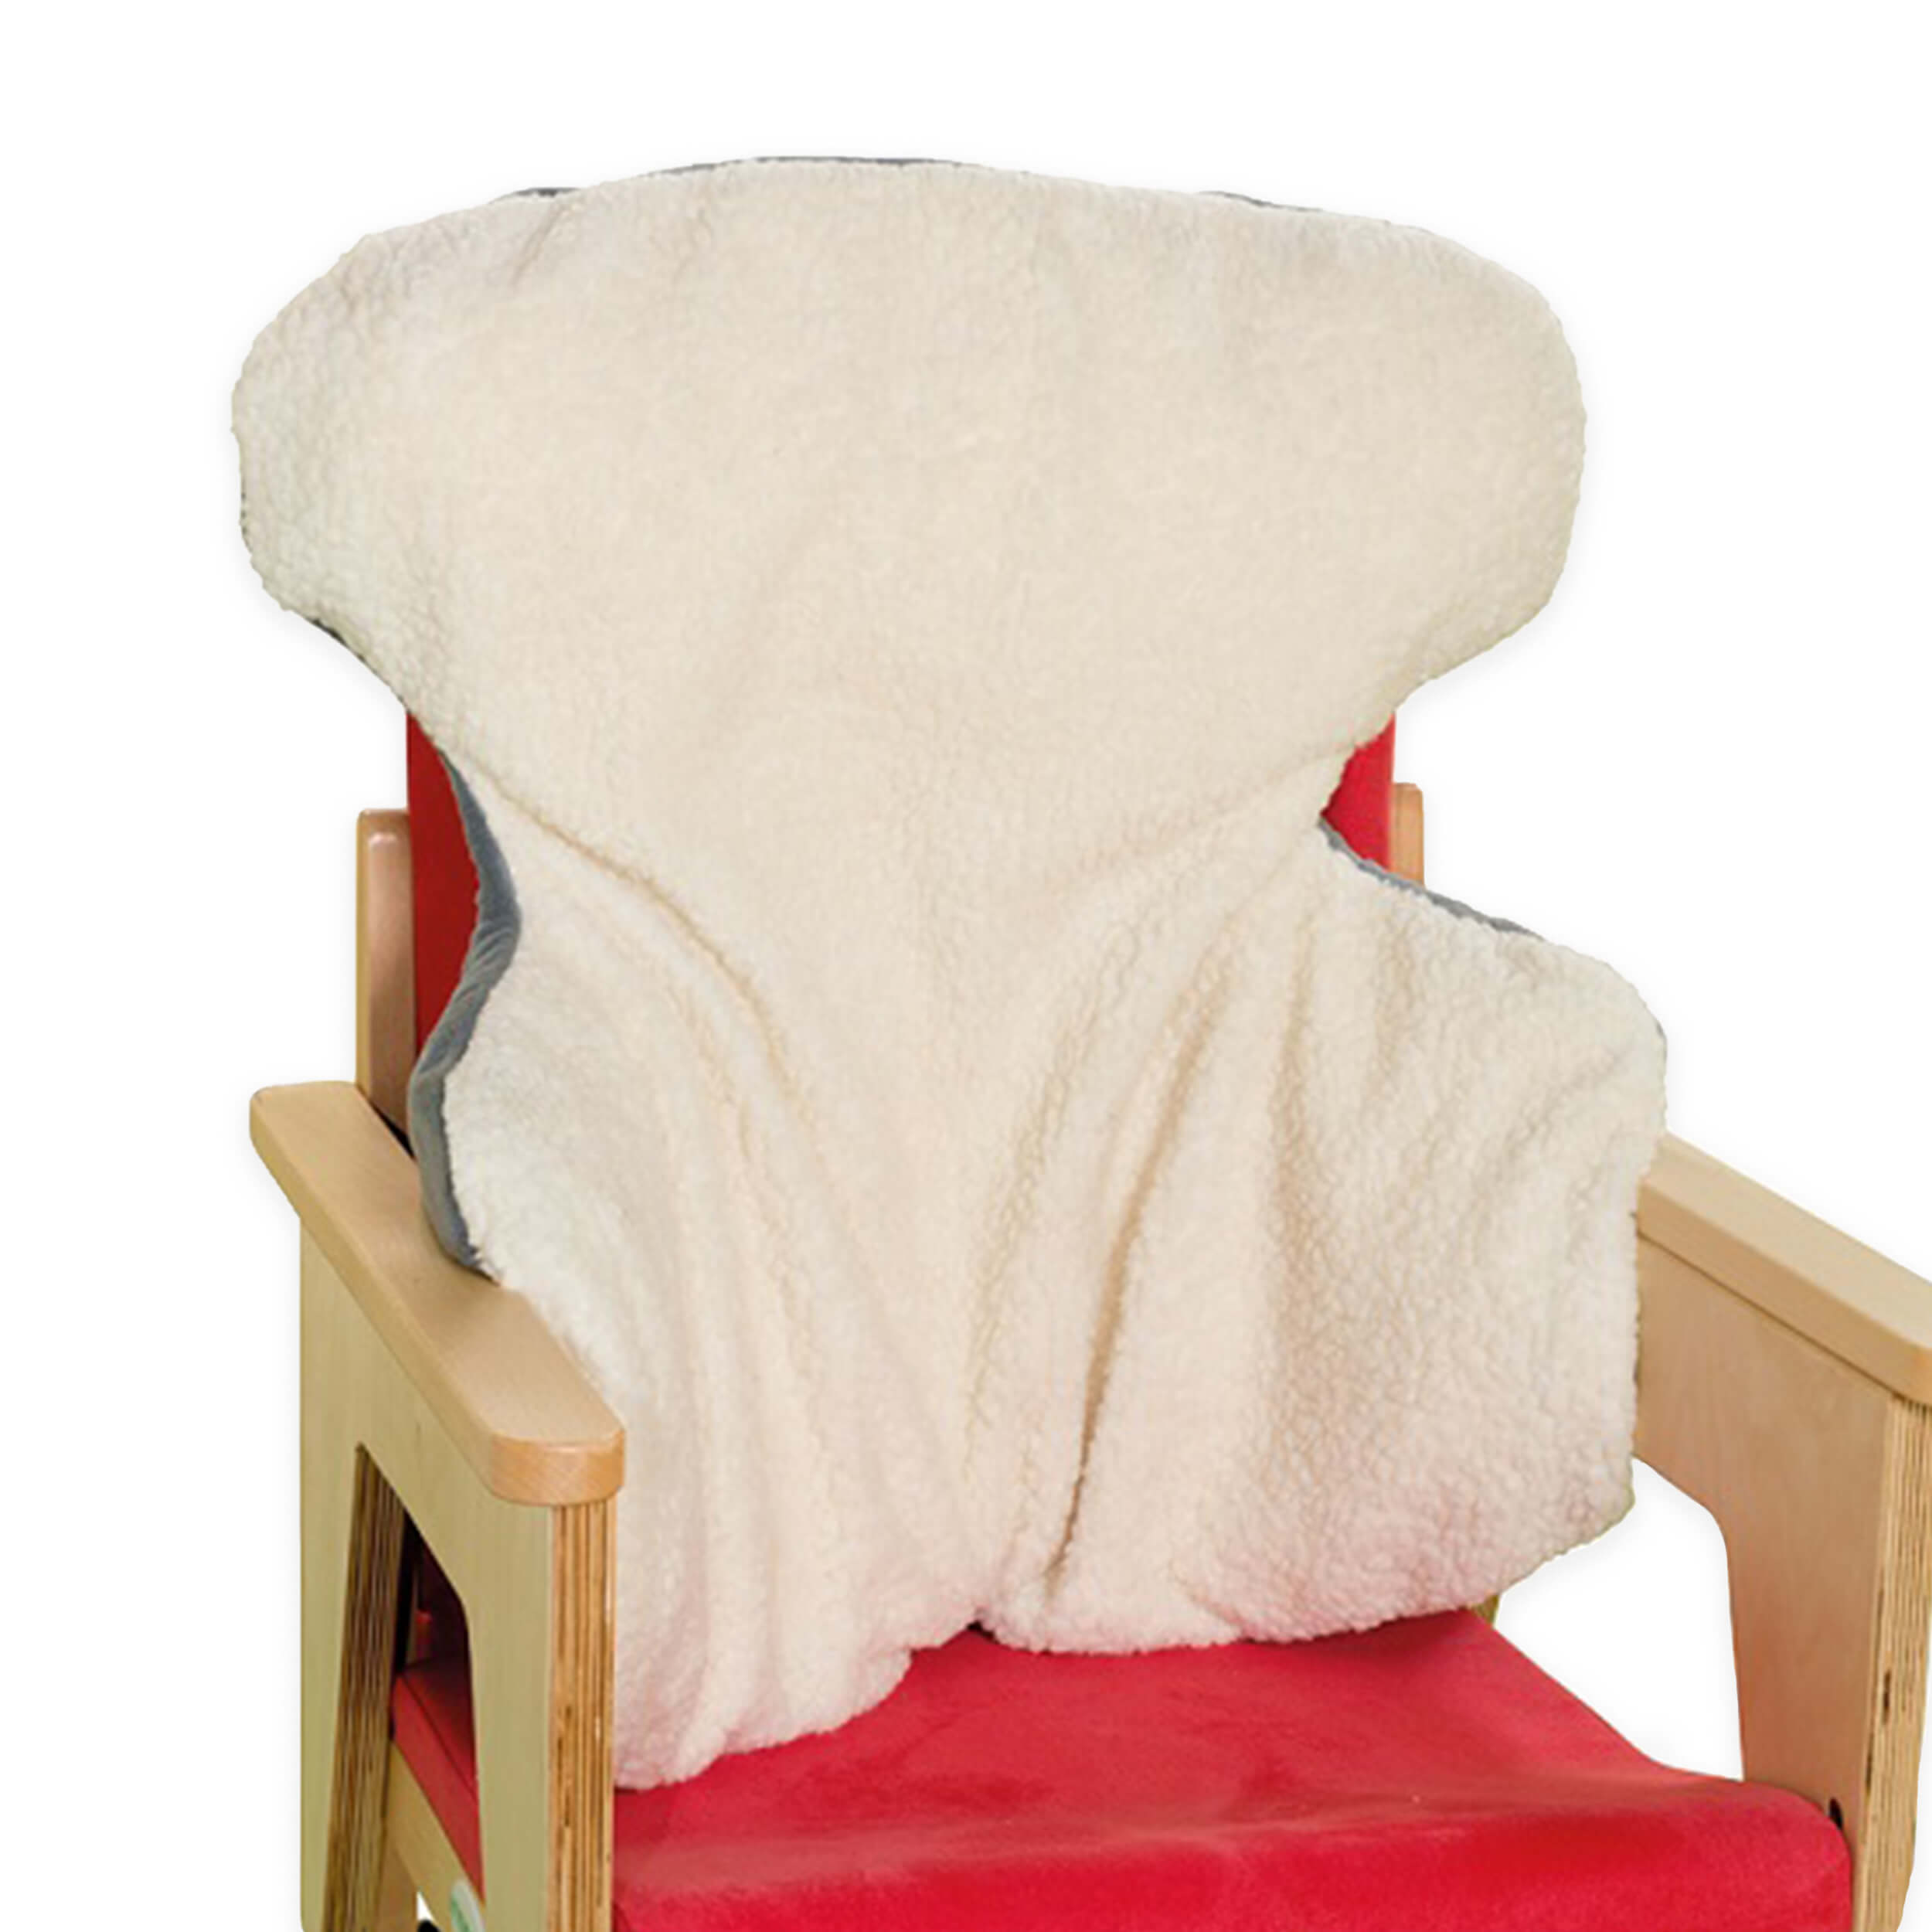 Jonvac Body Support in chair